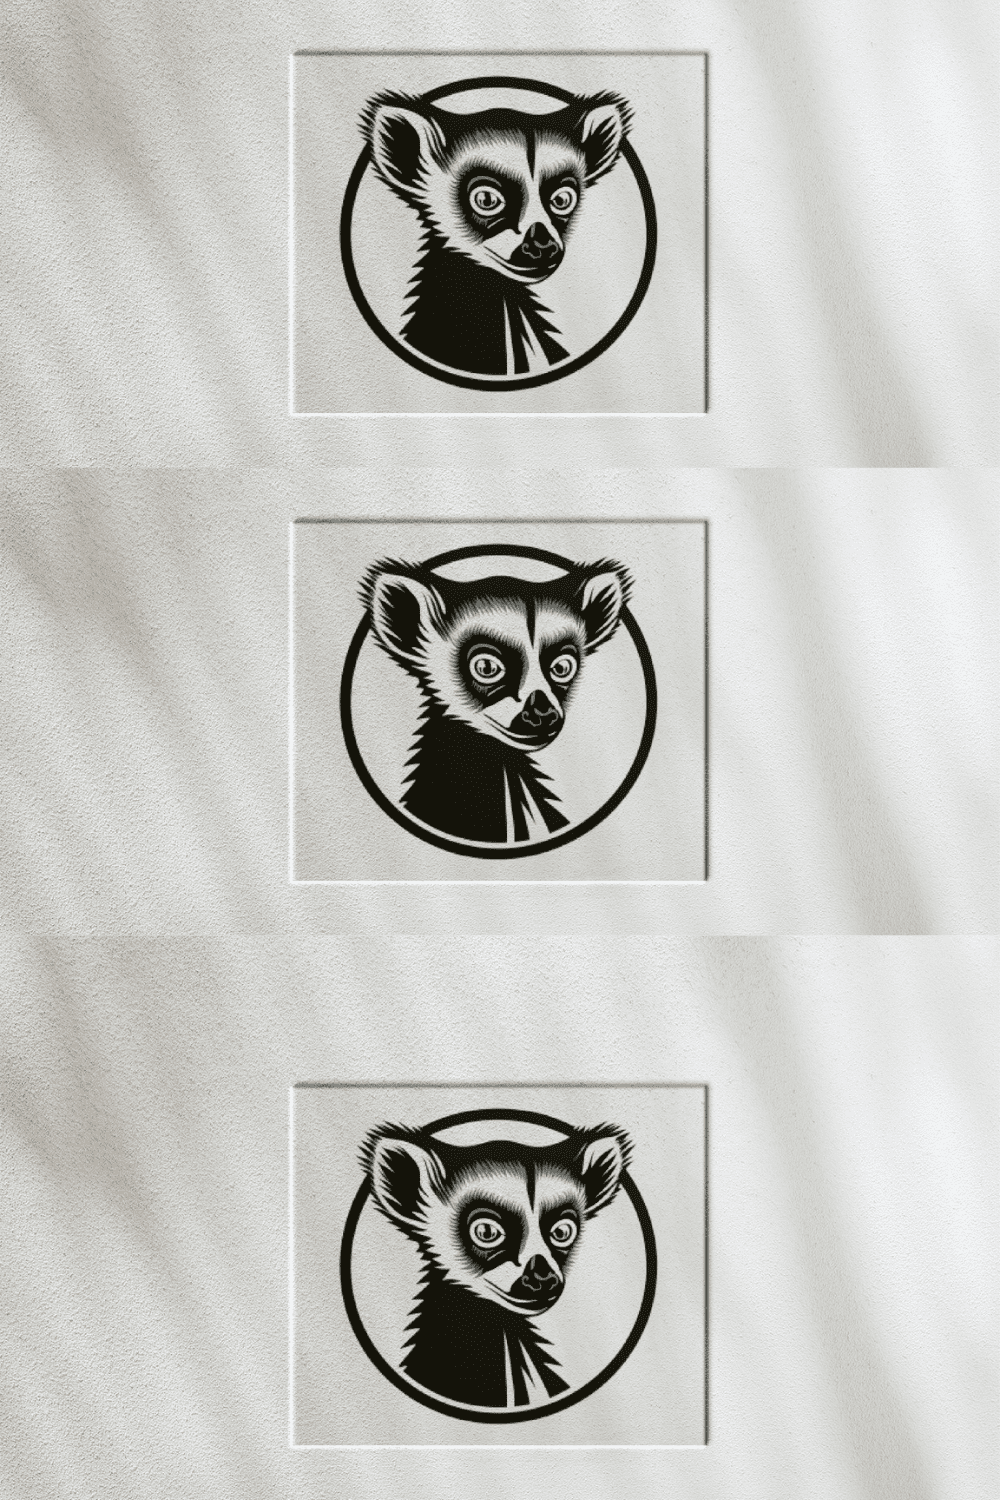 Lemur Logo pinterest preview image.